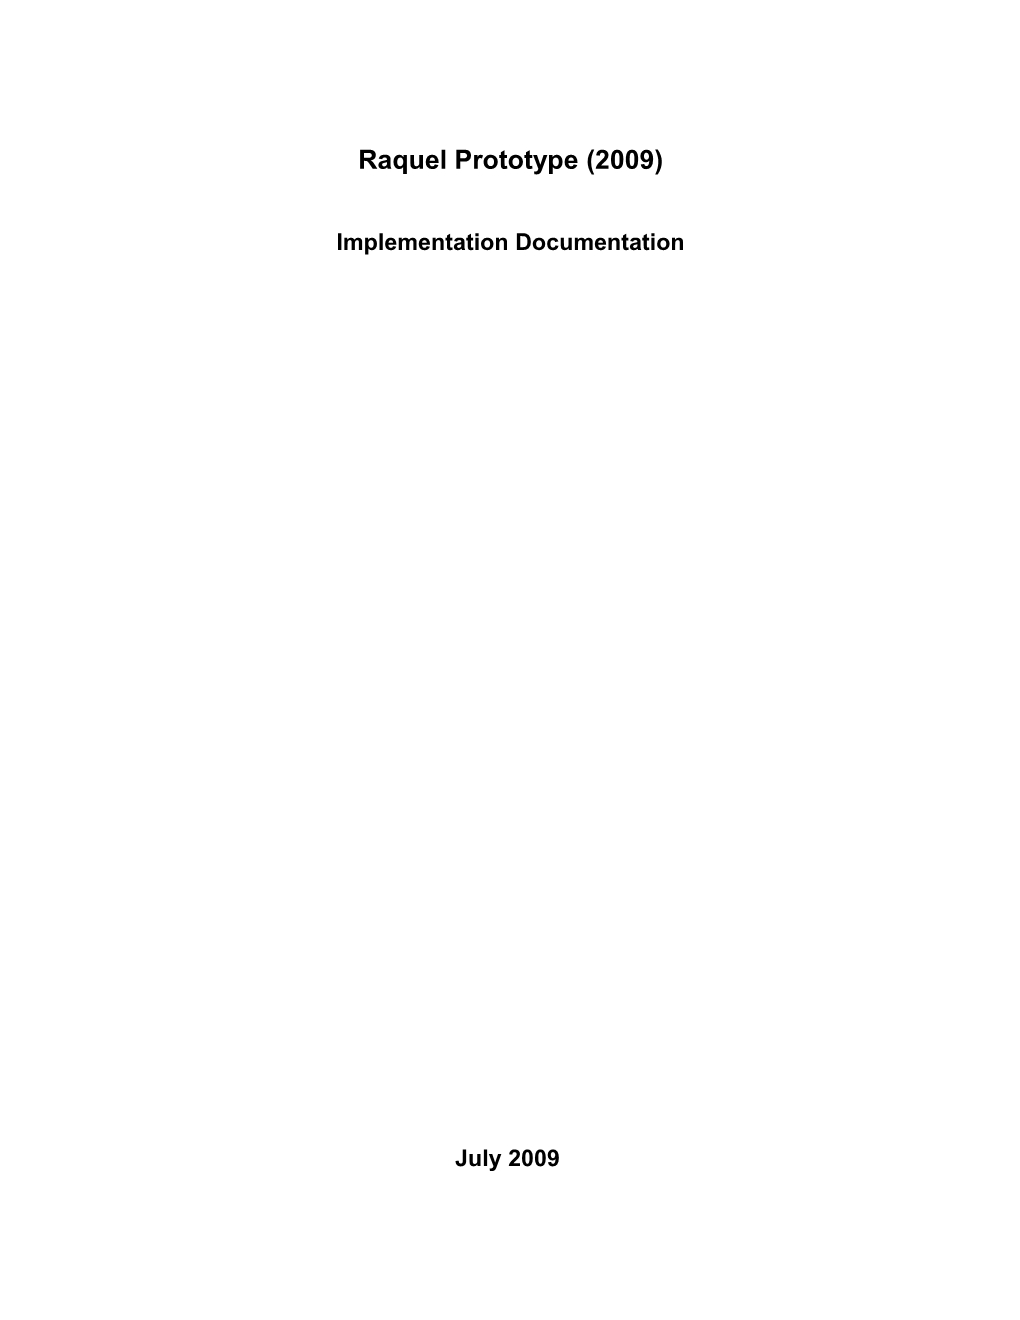 Raquel Prototype (2009) Implementation Documentation